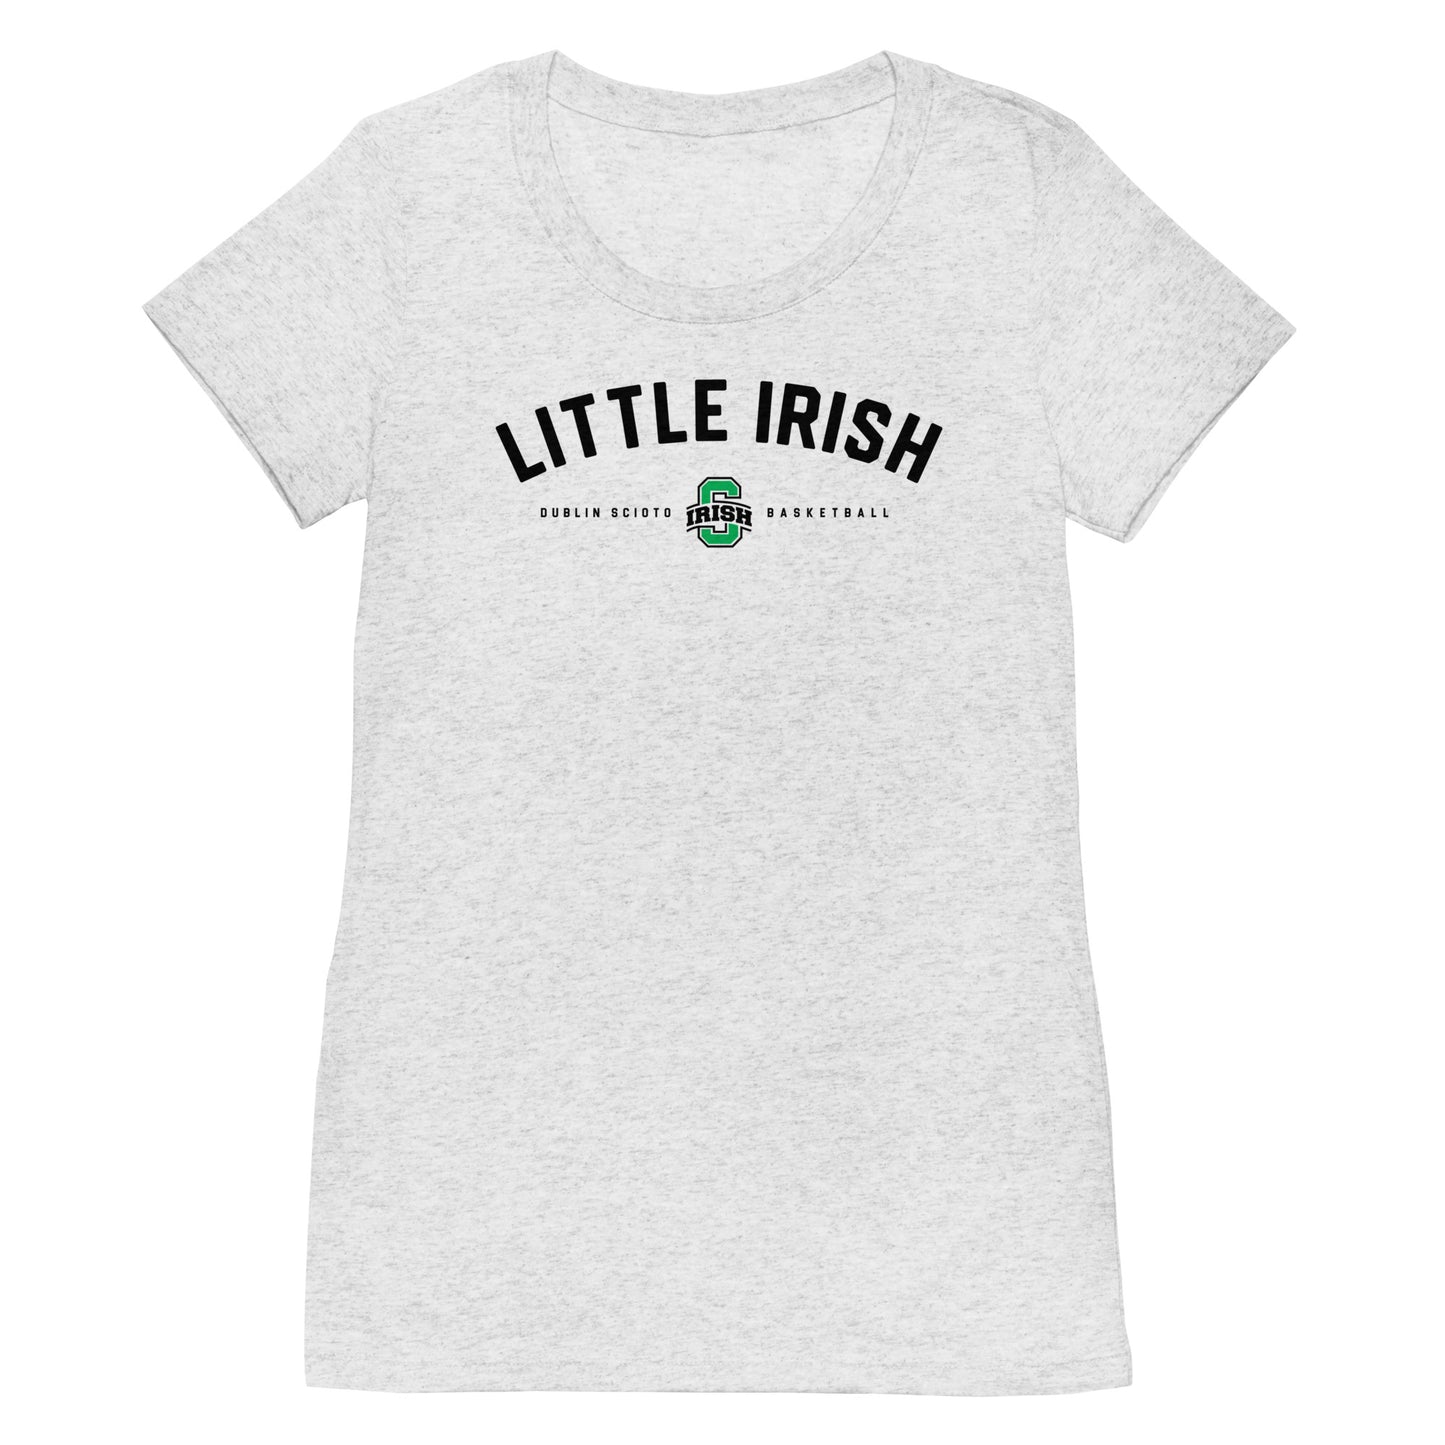 LITTLE IRISH_SCIOTO LOGO-Tri-blend Ladies' short sleeve t-shirt